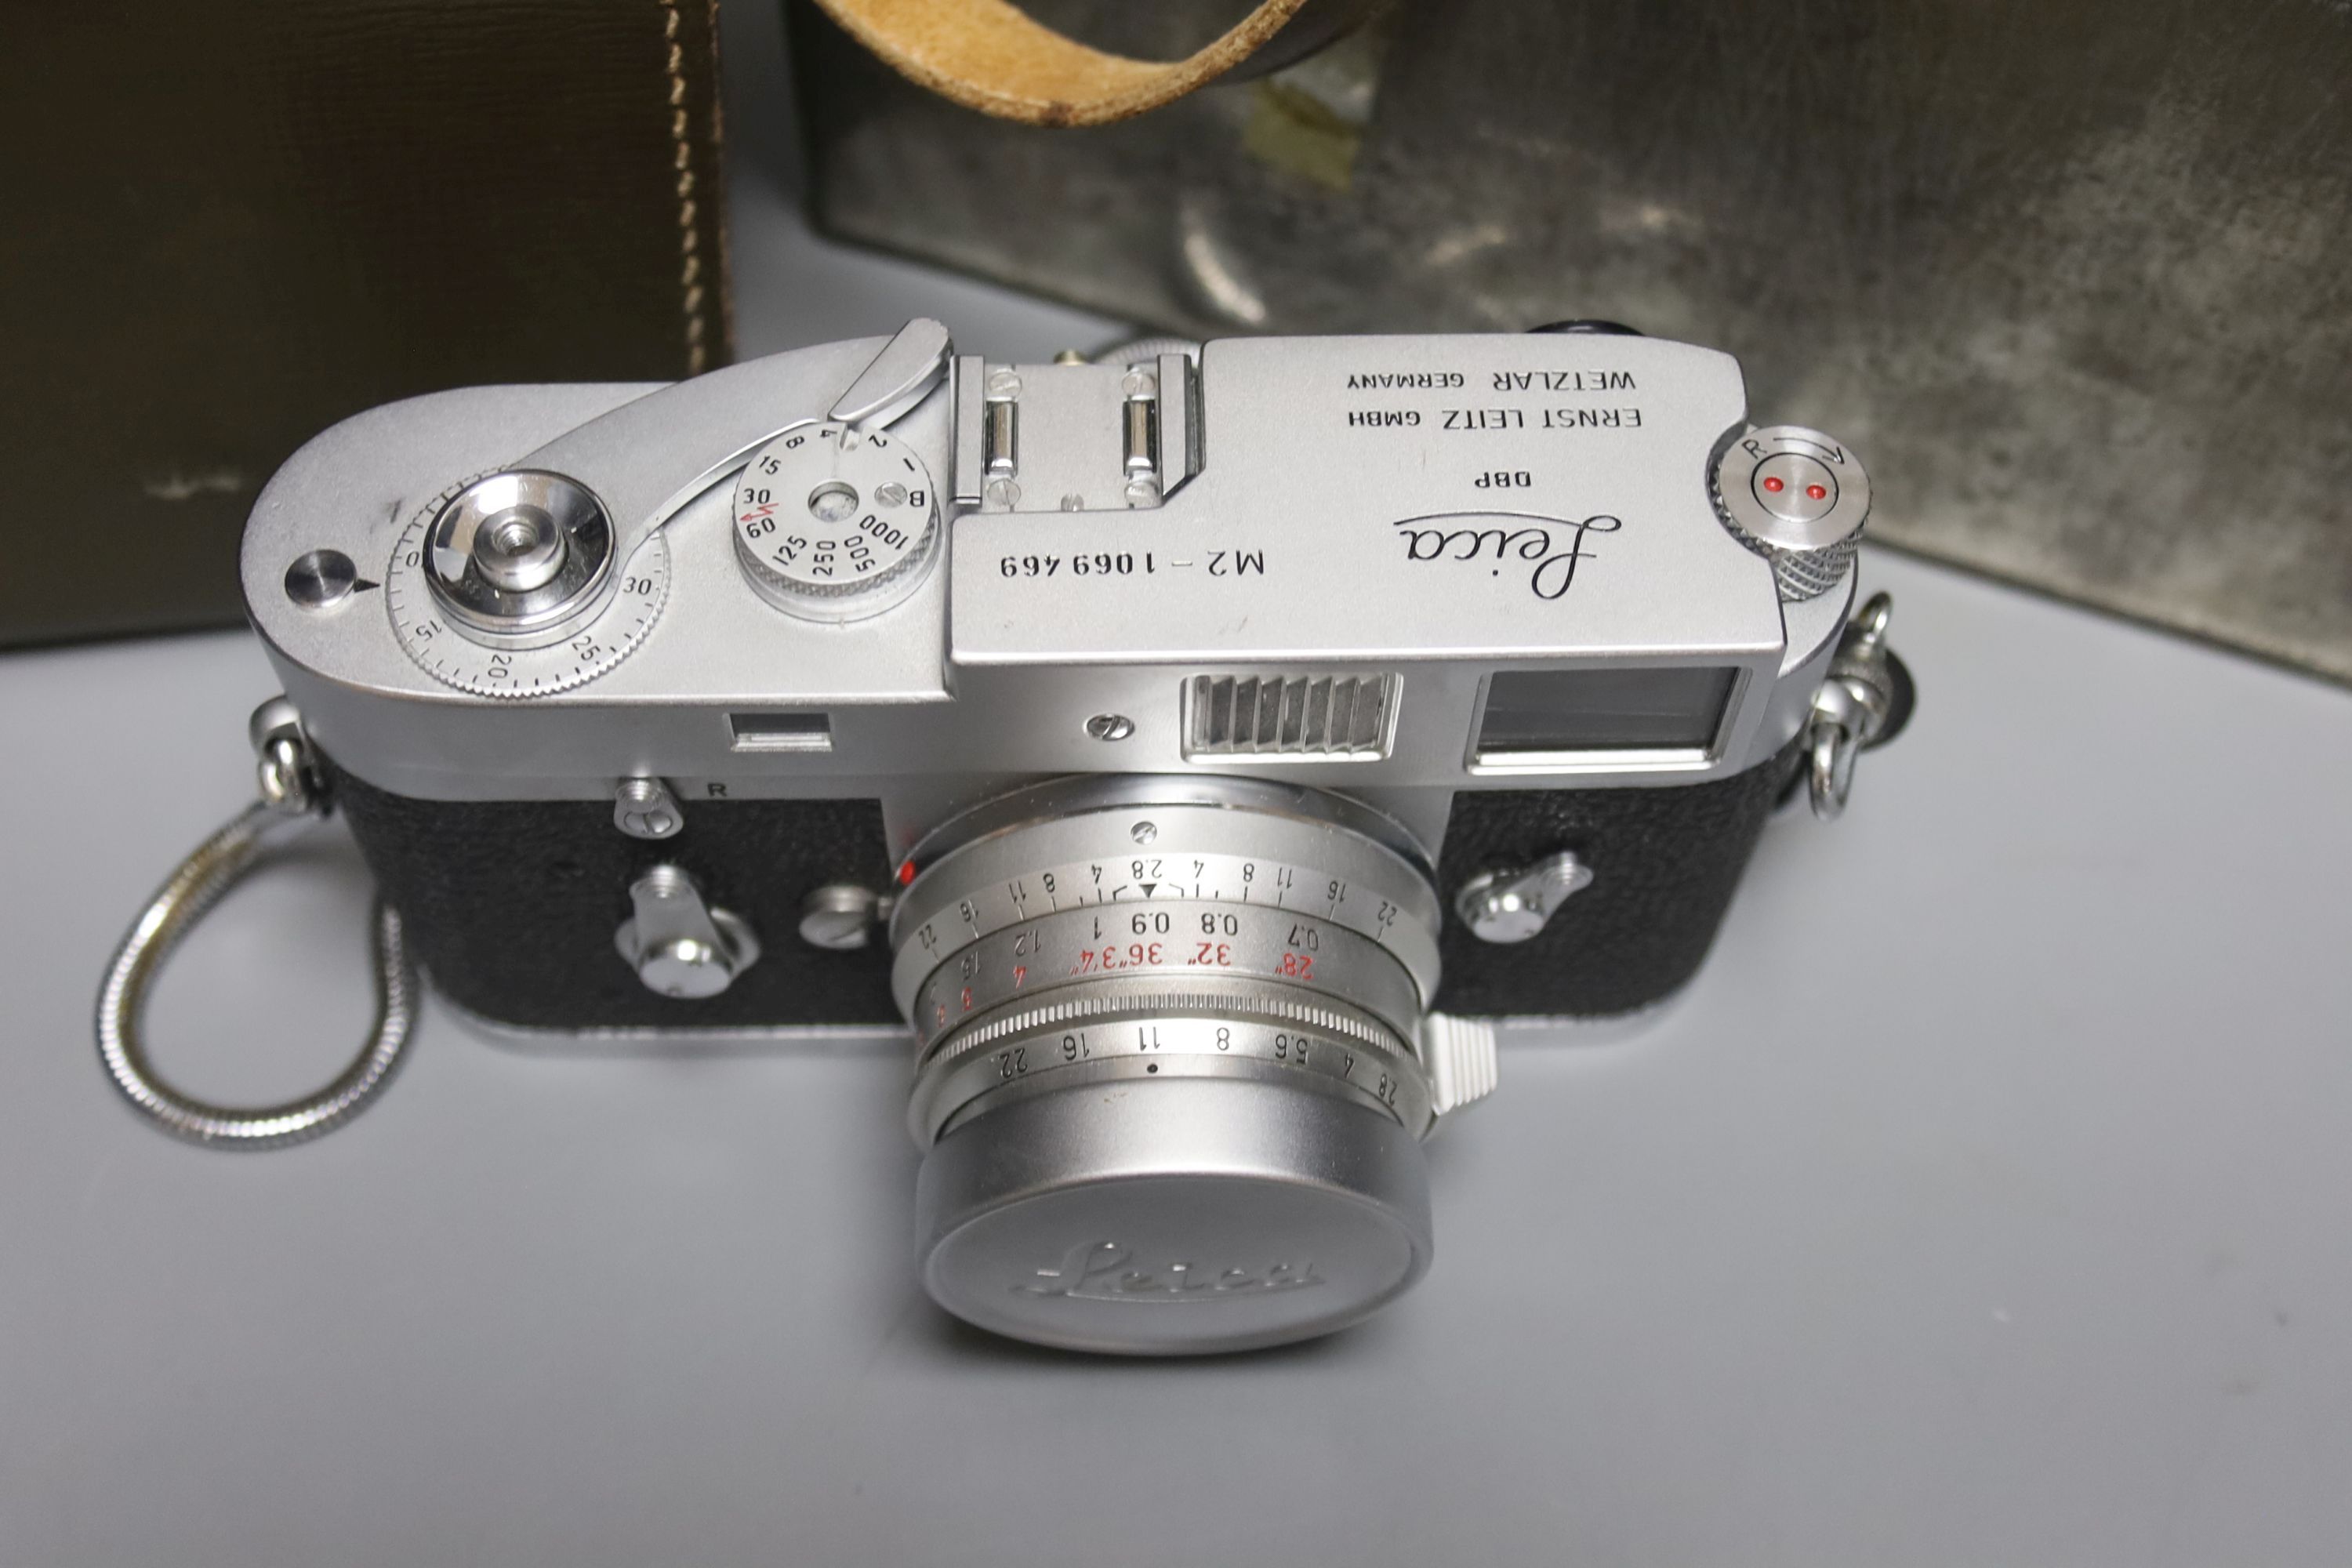 A Leica M2 camera, serial no. 1069469 with 2 lenses Elmarit 90mm F2.8 no. 1918216 and Summaron 35mm F2.8 no. 1932216